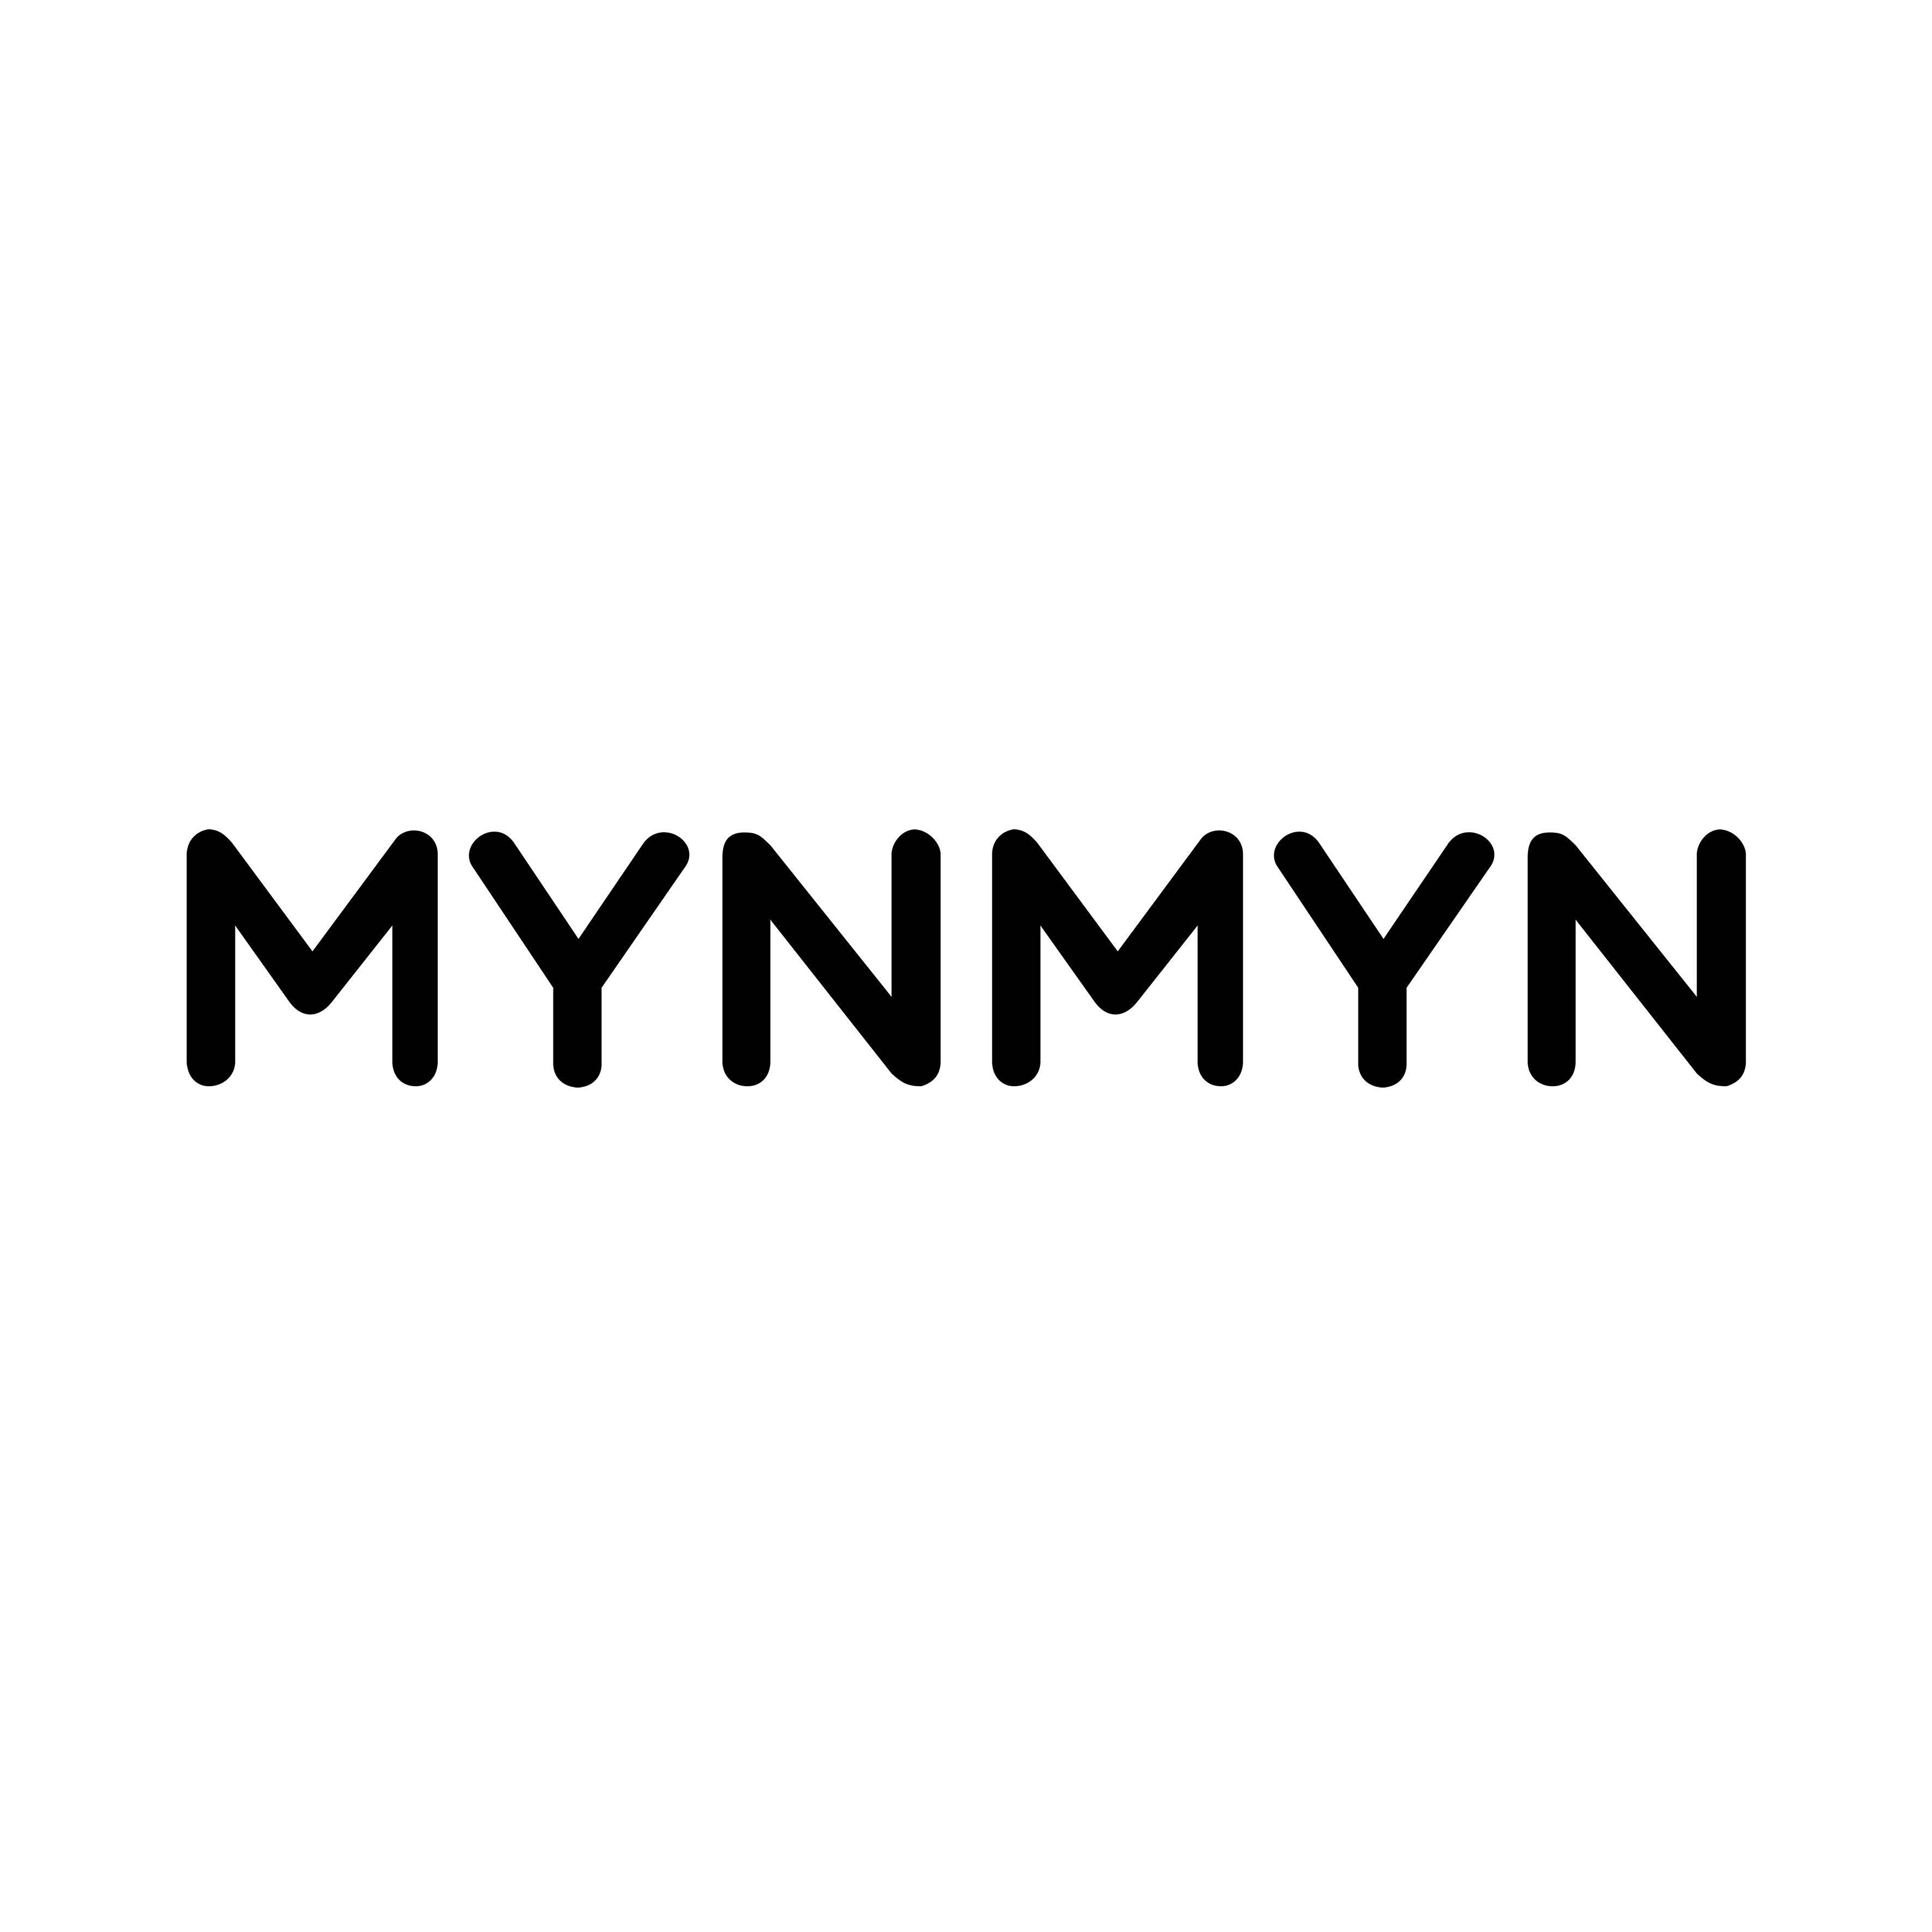 Mynmyn Pte Ltd